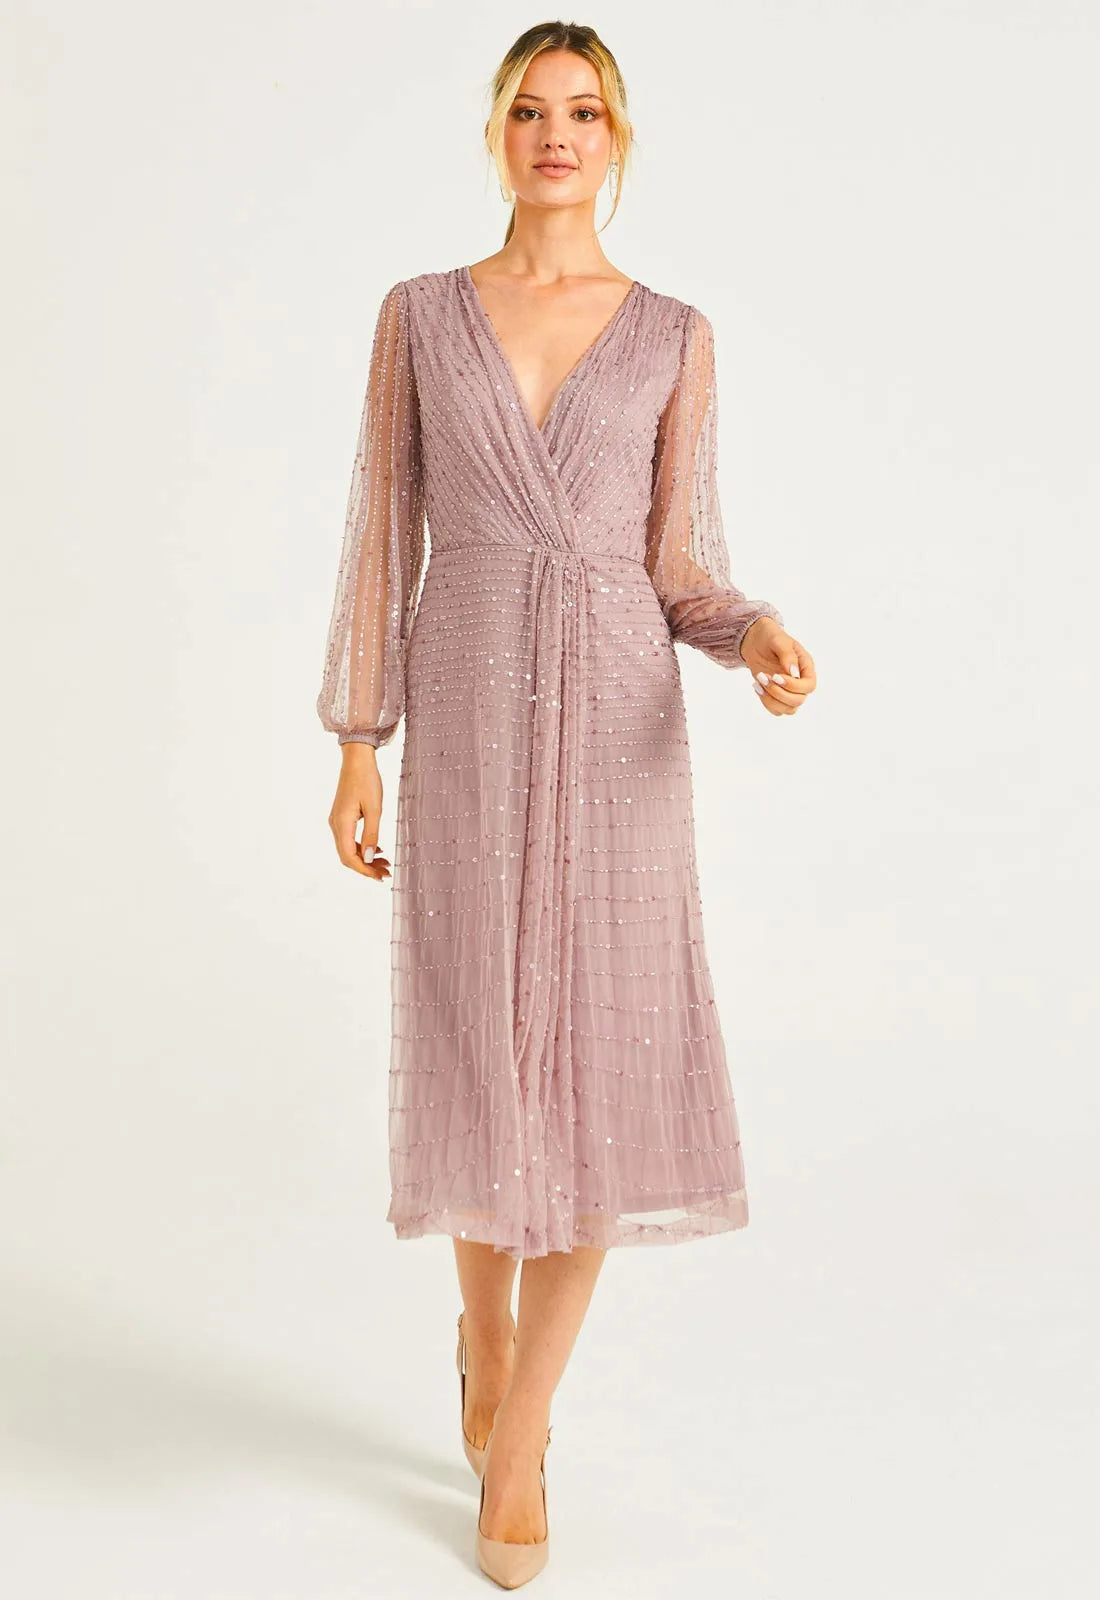 Angeleye mesh sleeve cocktail dress in lavender